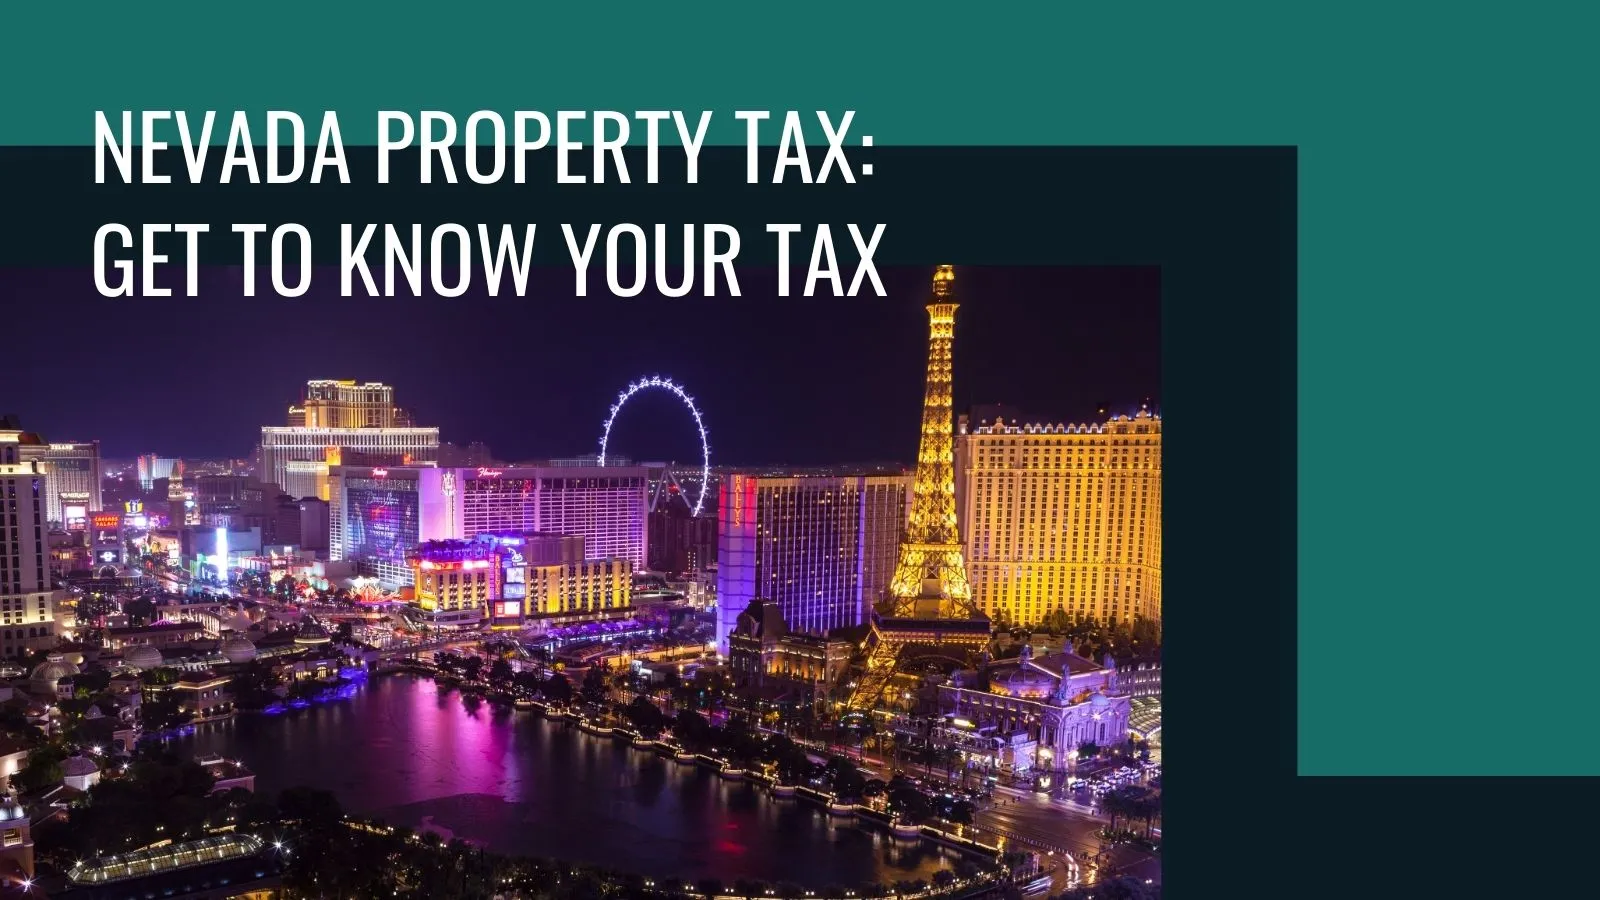 Nevada Property Tax: Key Highlights